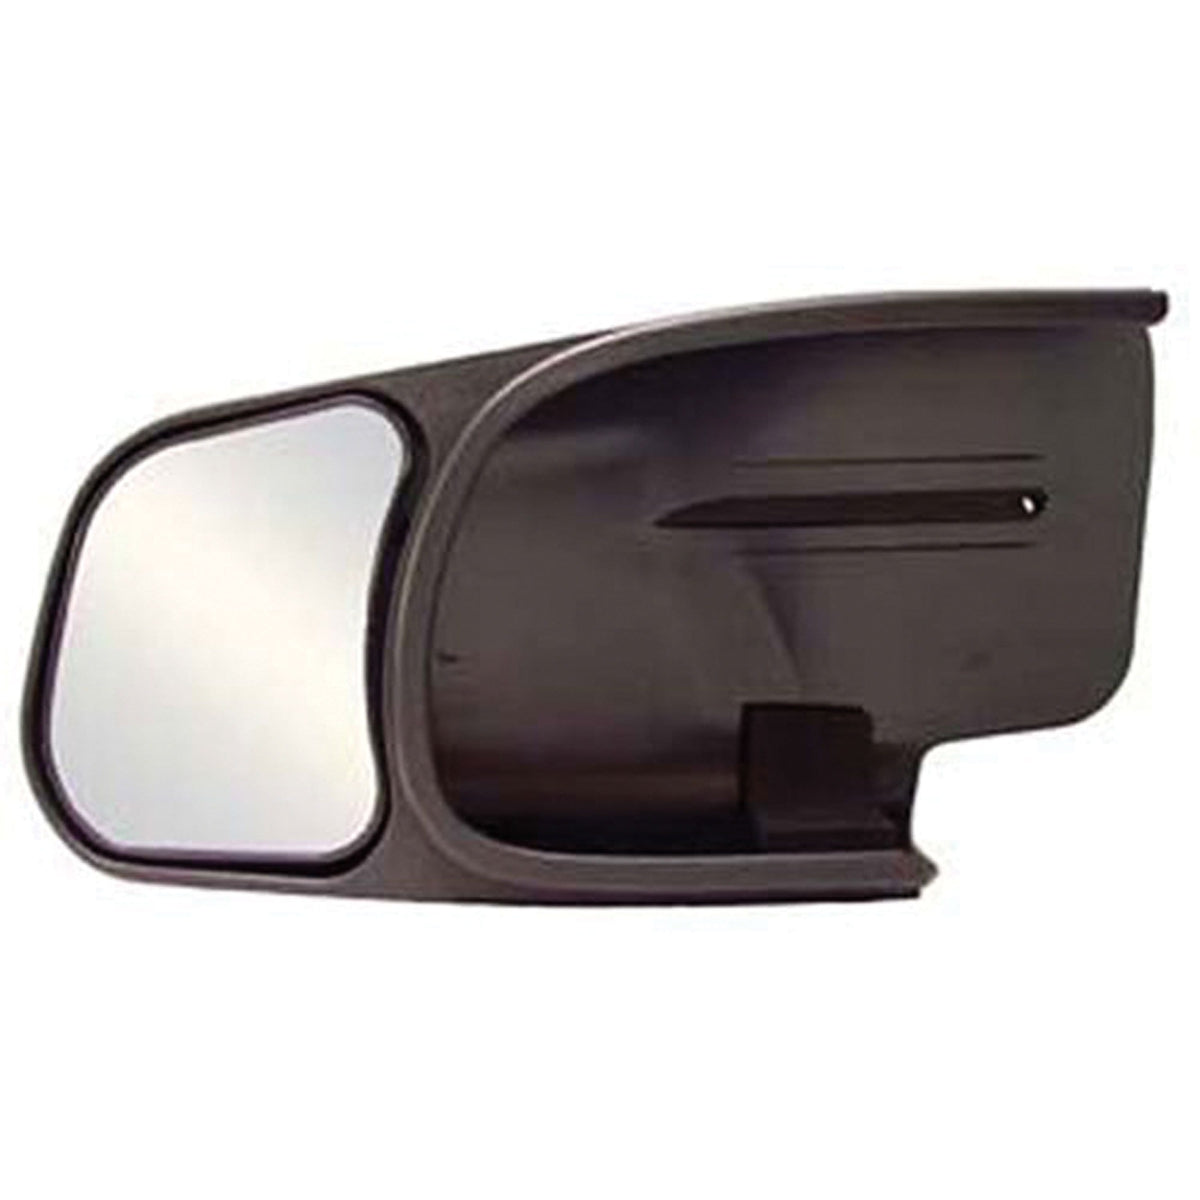 Cipa Custom Towing Mirror for Chevy/GMC/Cadillac Passenger Side #10802